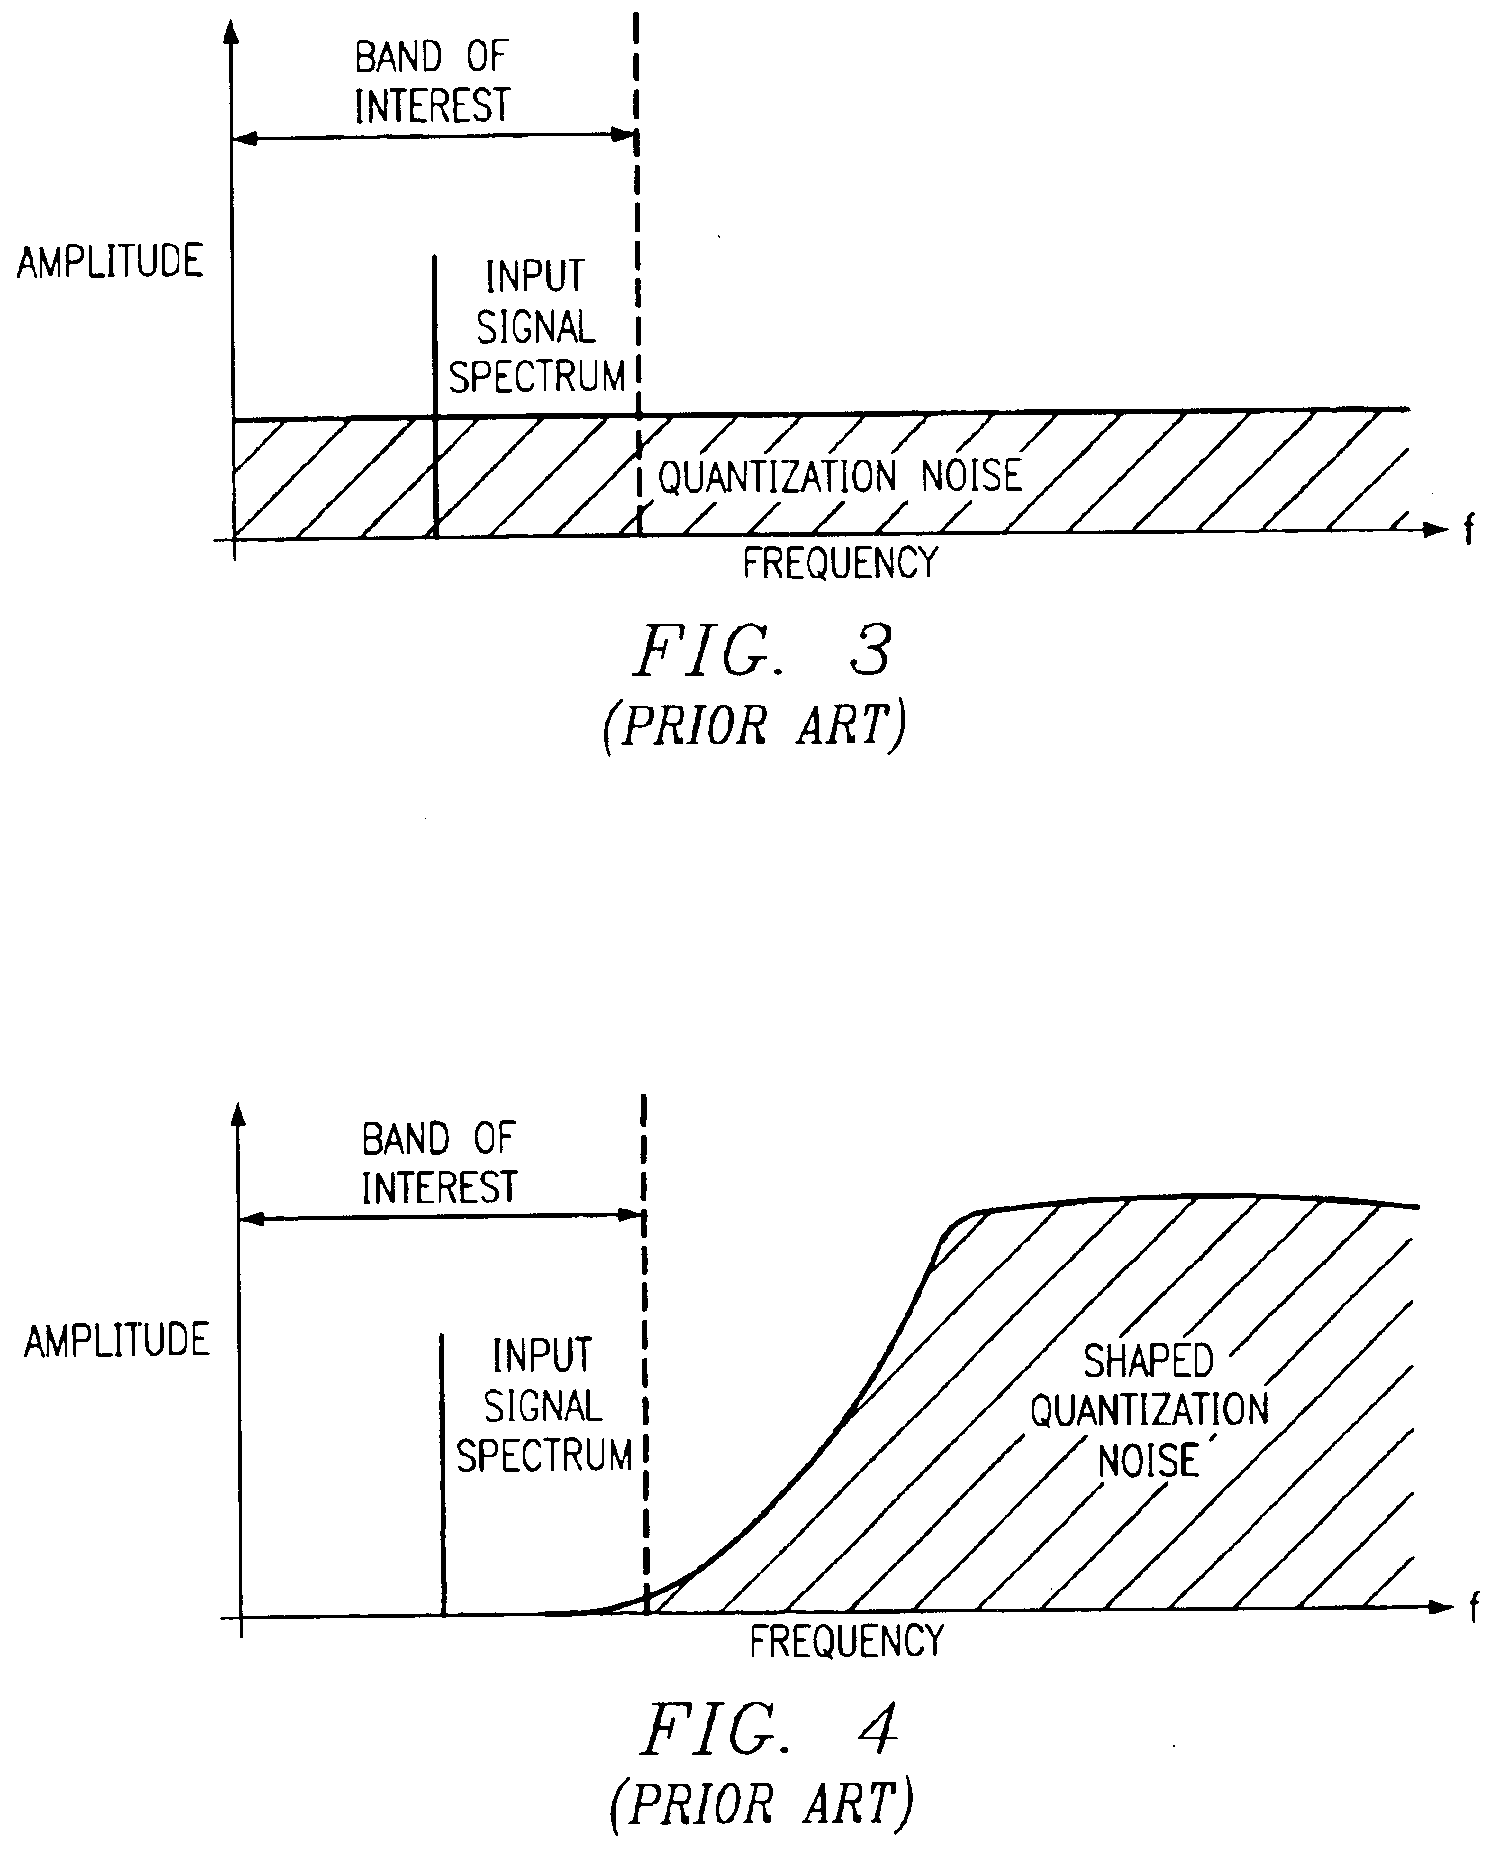 Delta-sigma modulator system and method